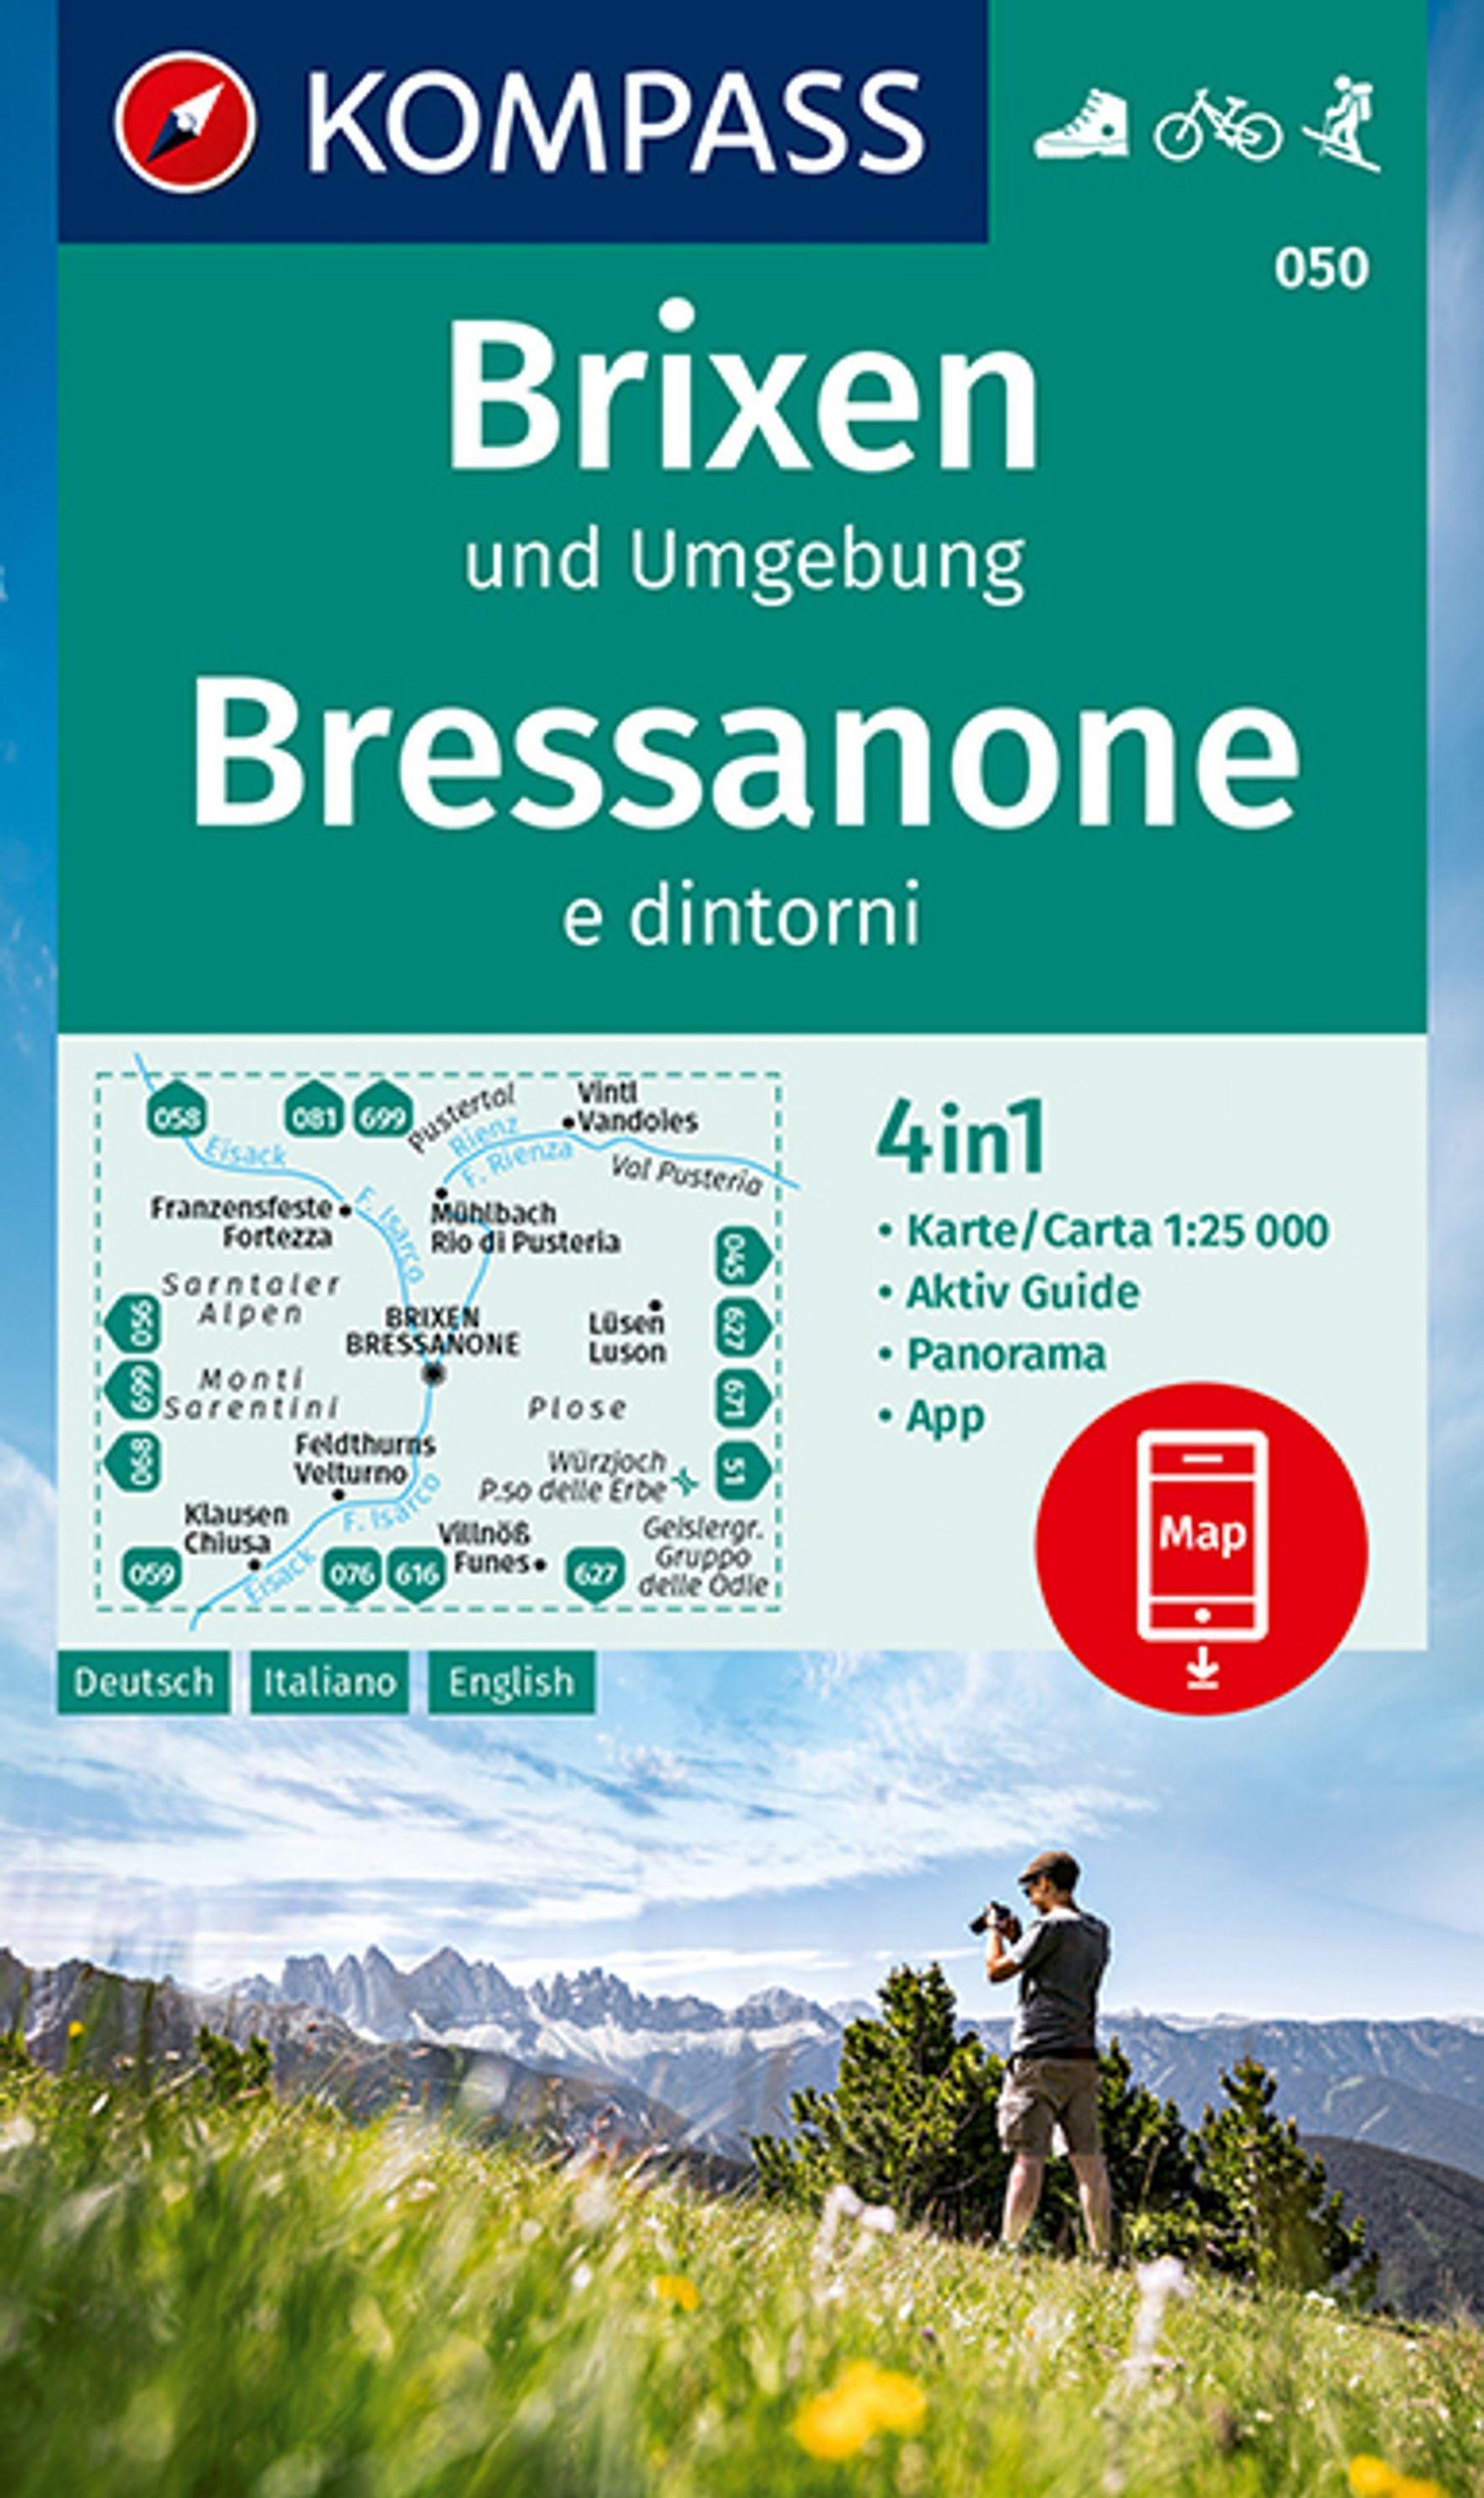 KOMPASS Wanderkarte 050 Brixen und Umgebung, Bressanone e dintorni 1:25.000  Buch versandkostenfrei bei Weltbild.at bestellen